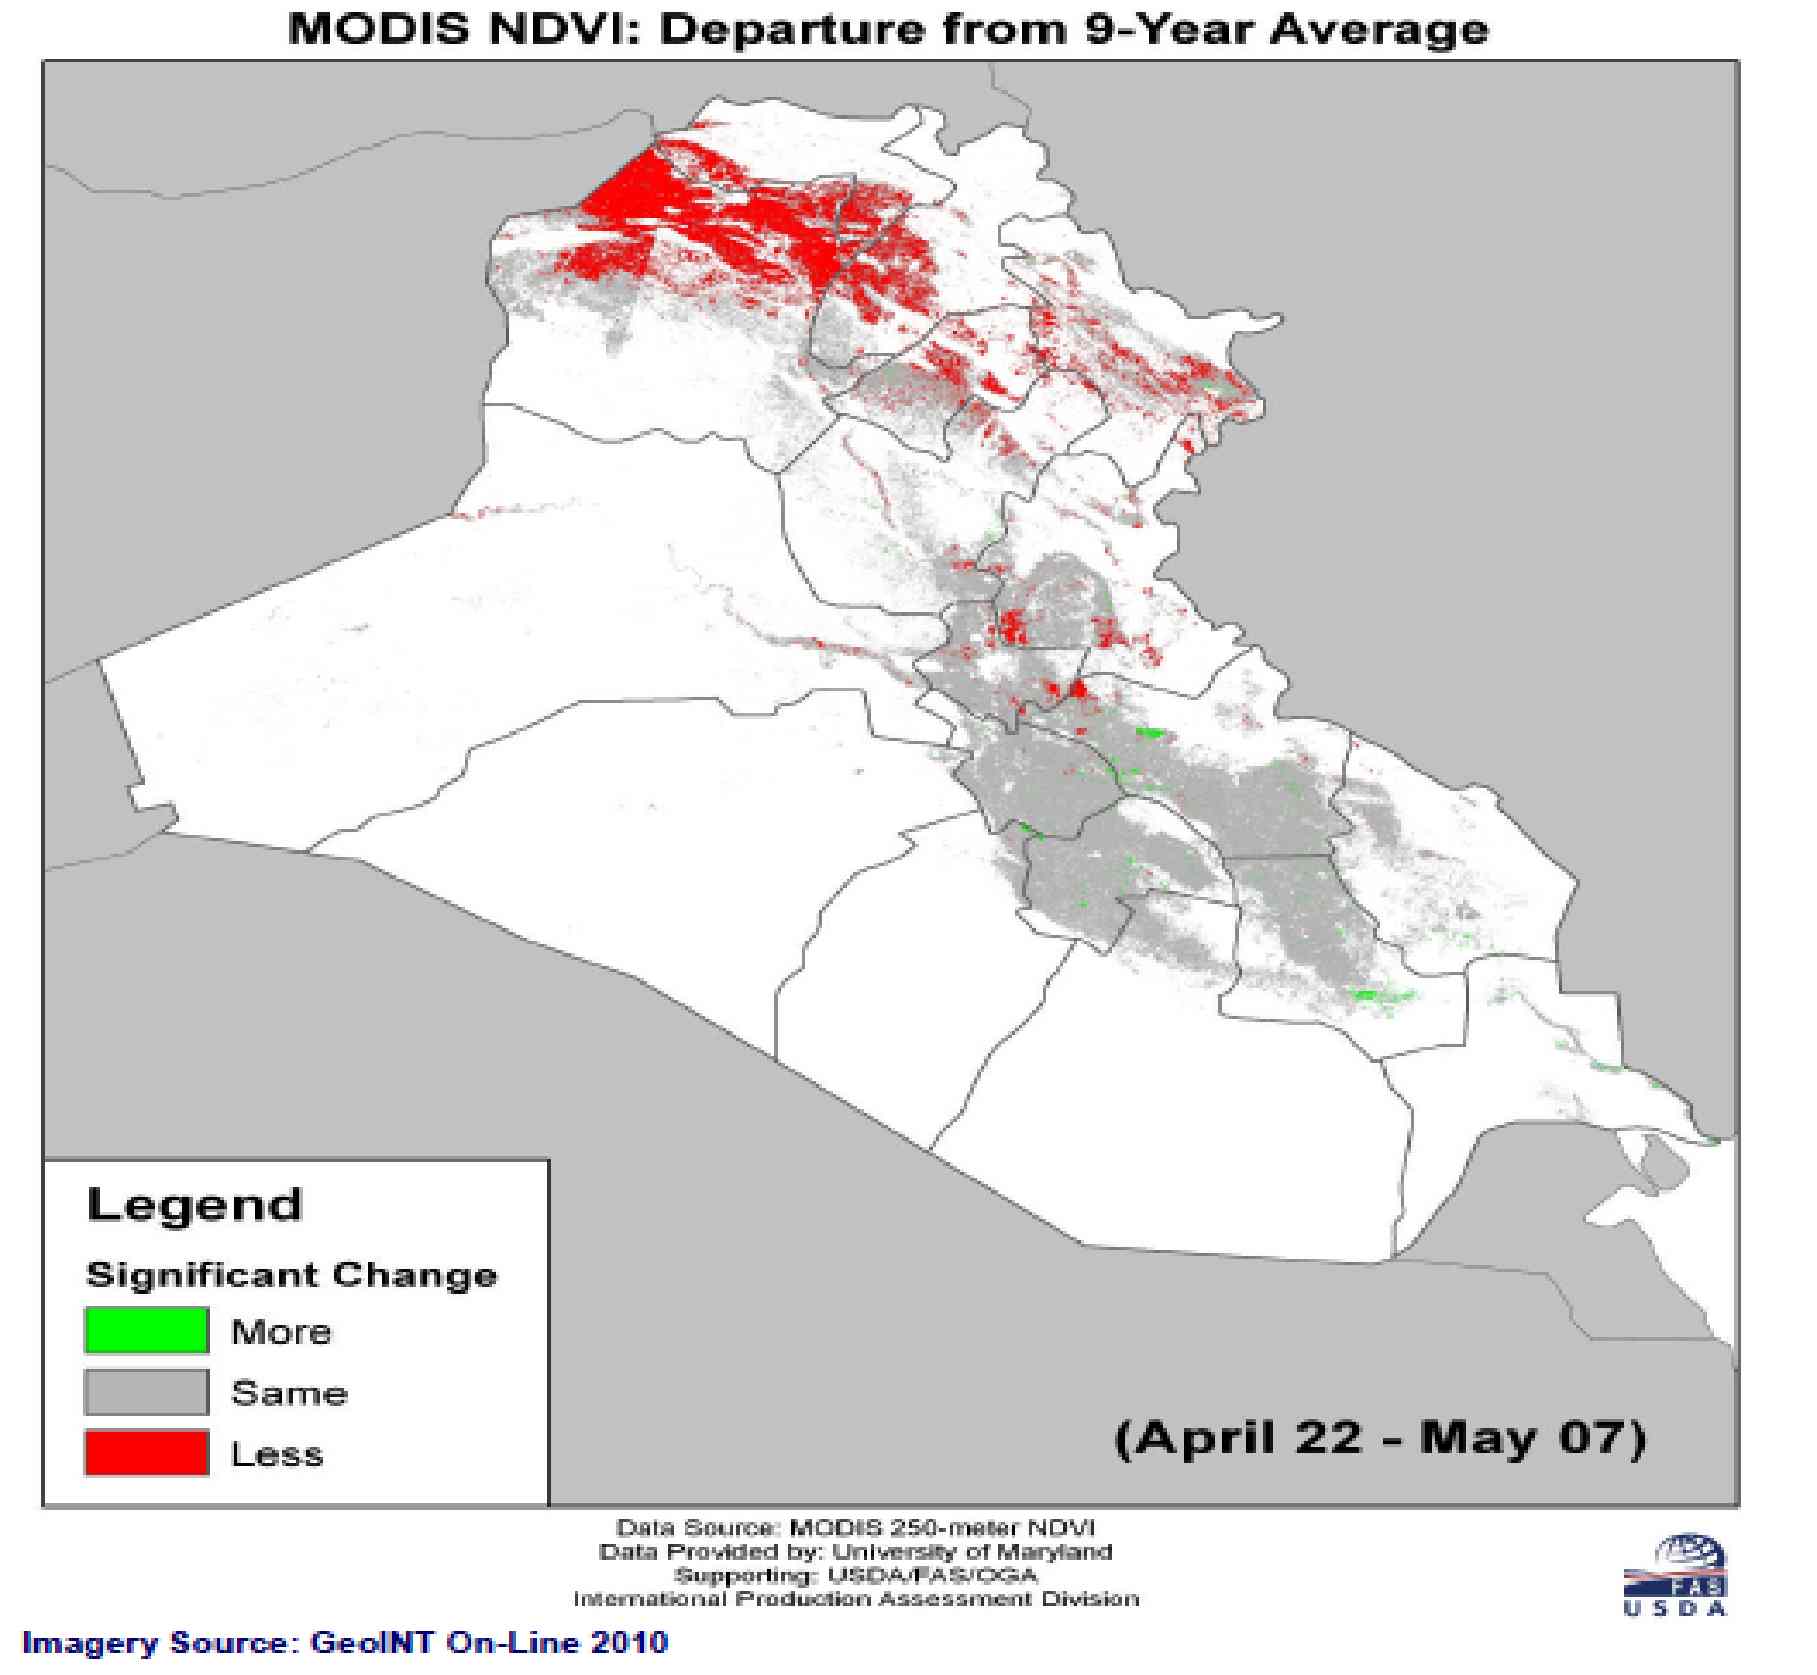 Satellite image of Iraq showing land use change over nine years 